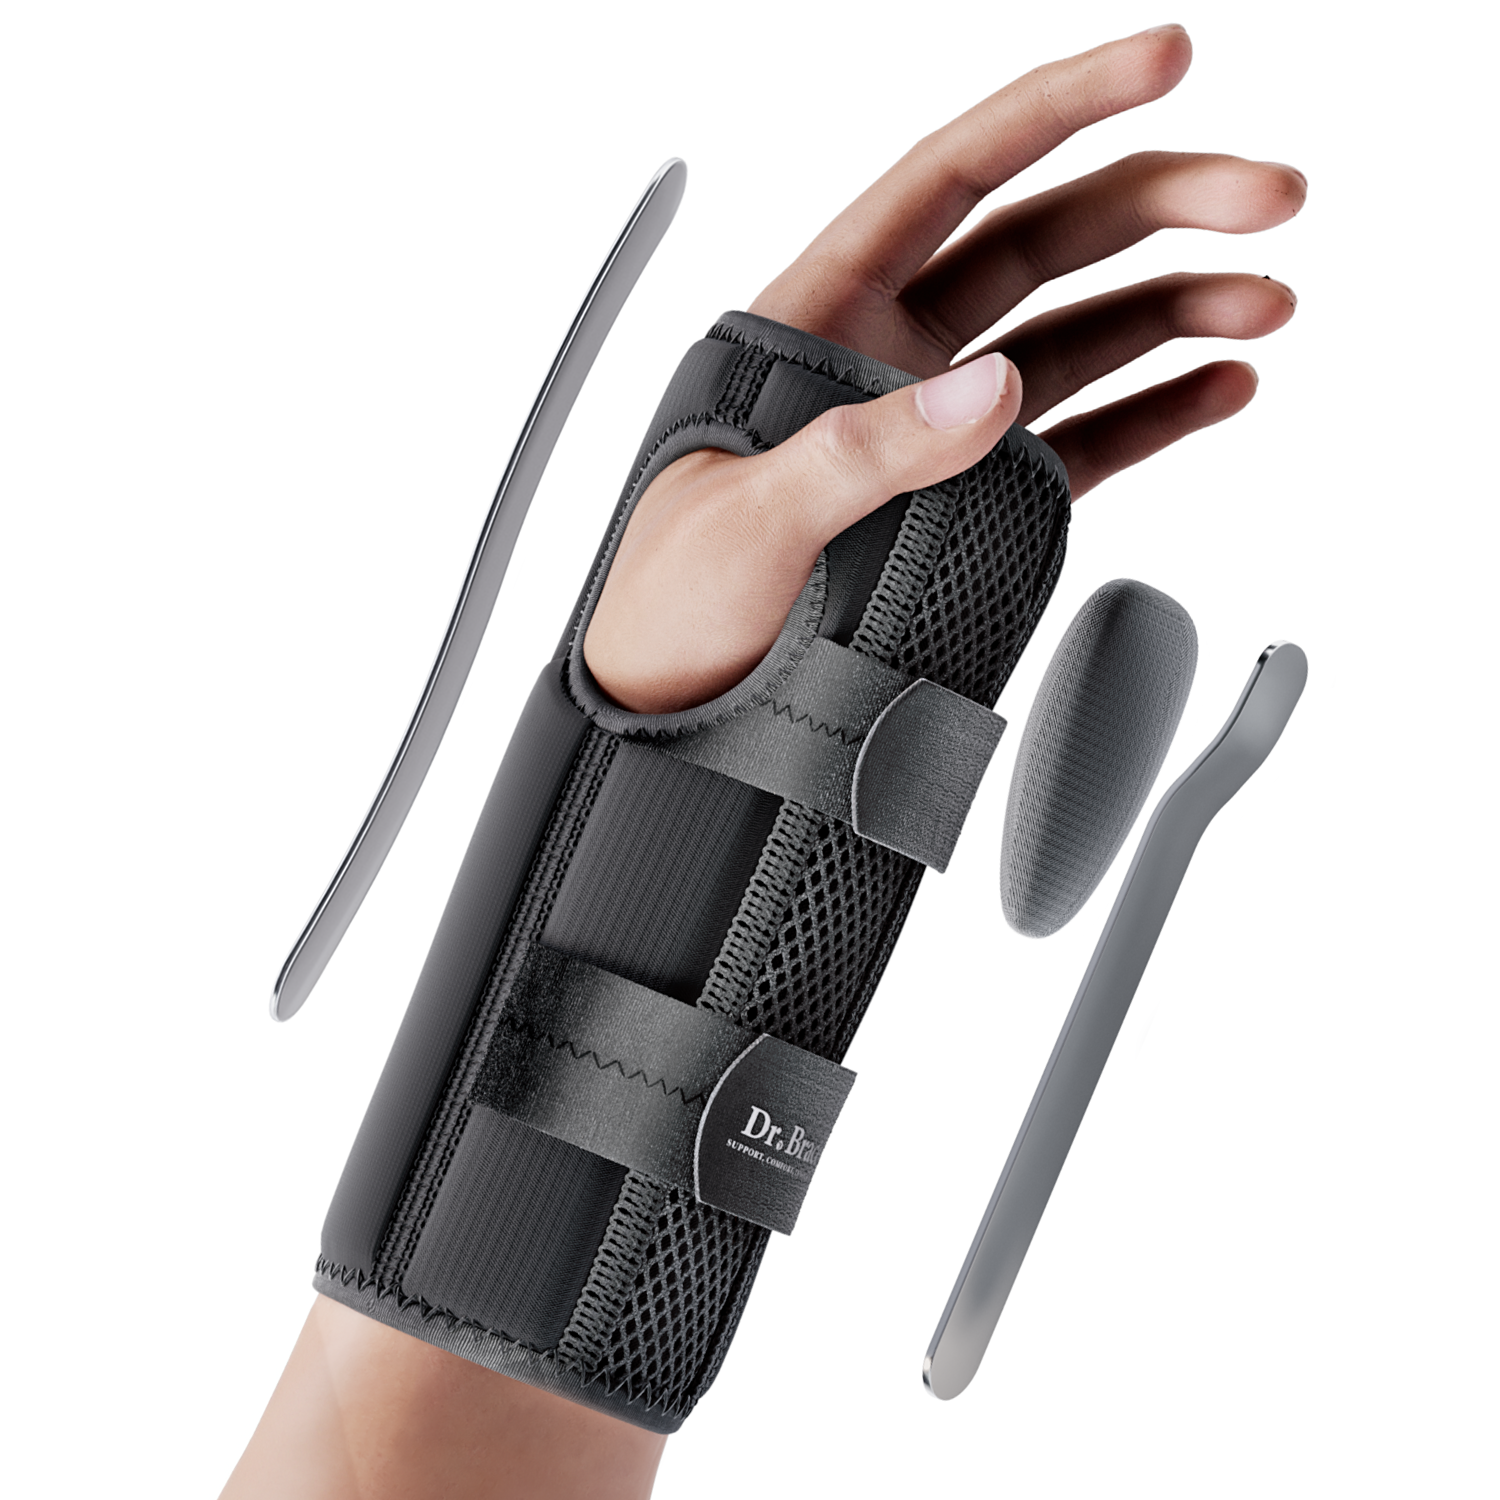 Elastic Wrist Braces with Removable Metal Splint for Sale